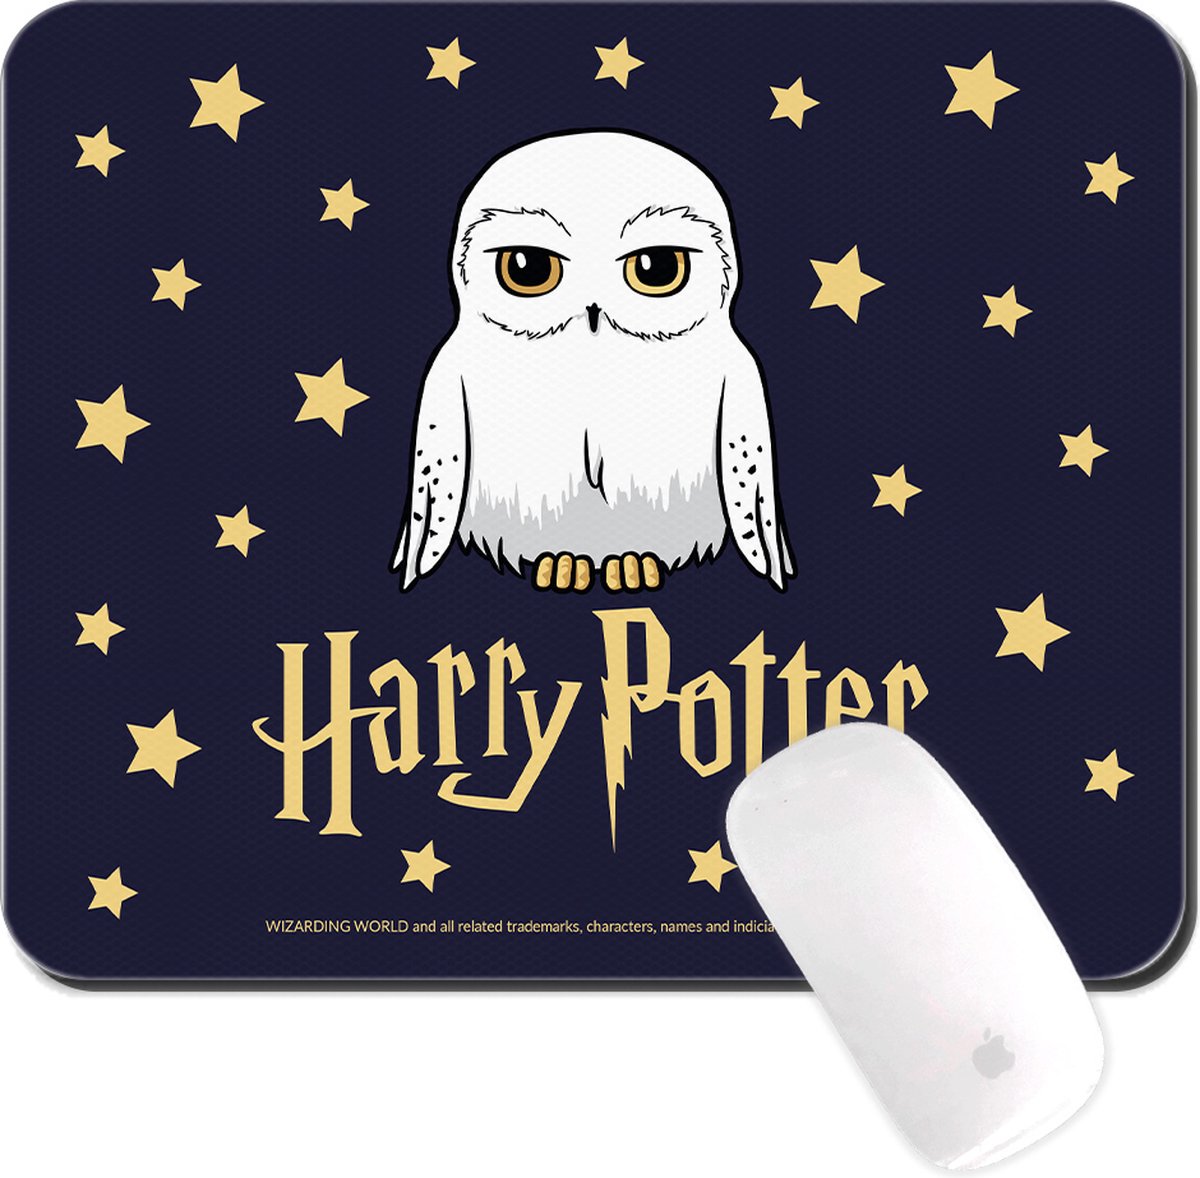 Harry Potter Muismat - 22x18 cm 3mm dik